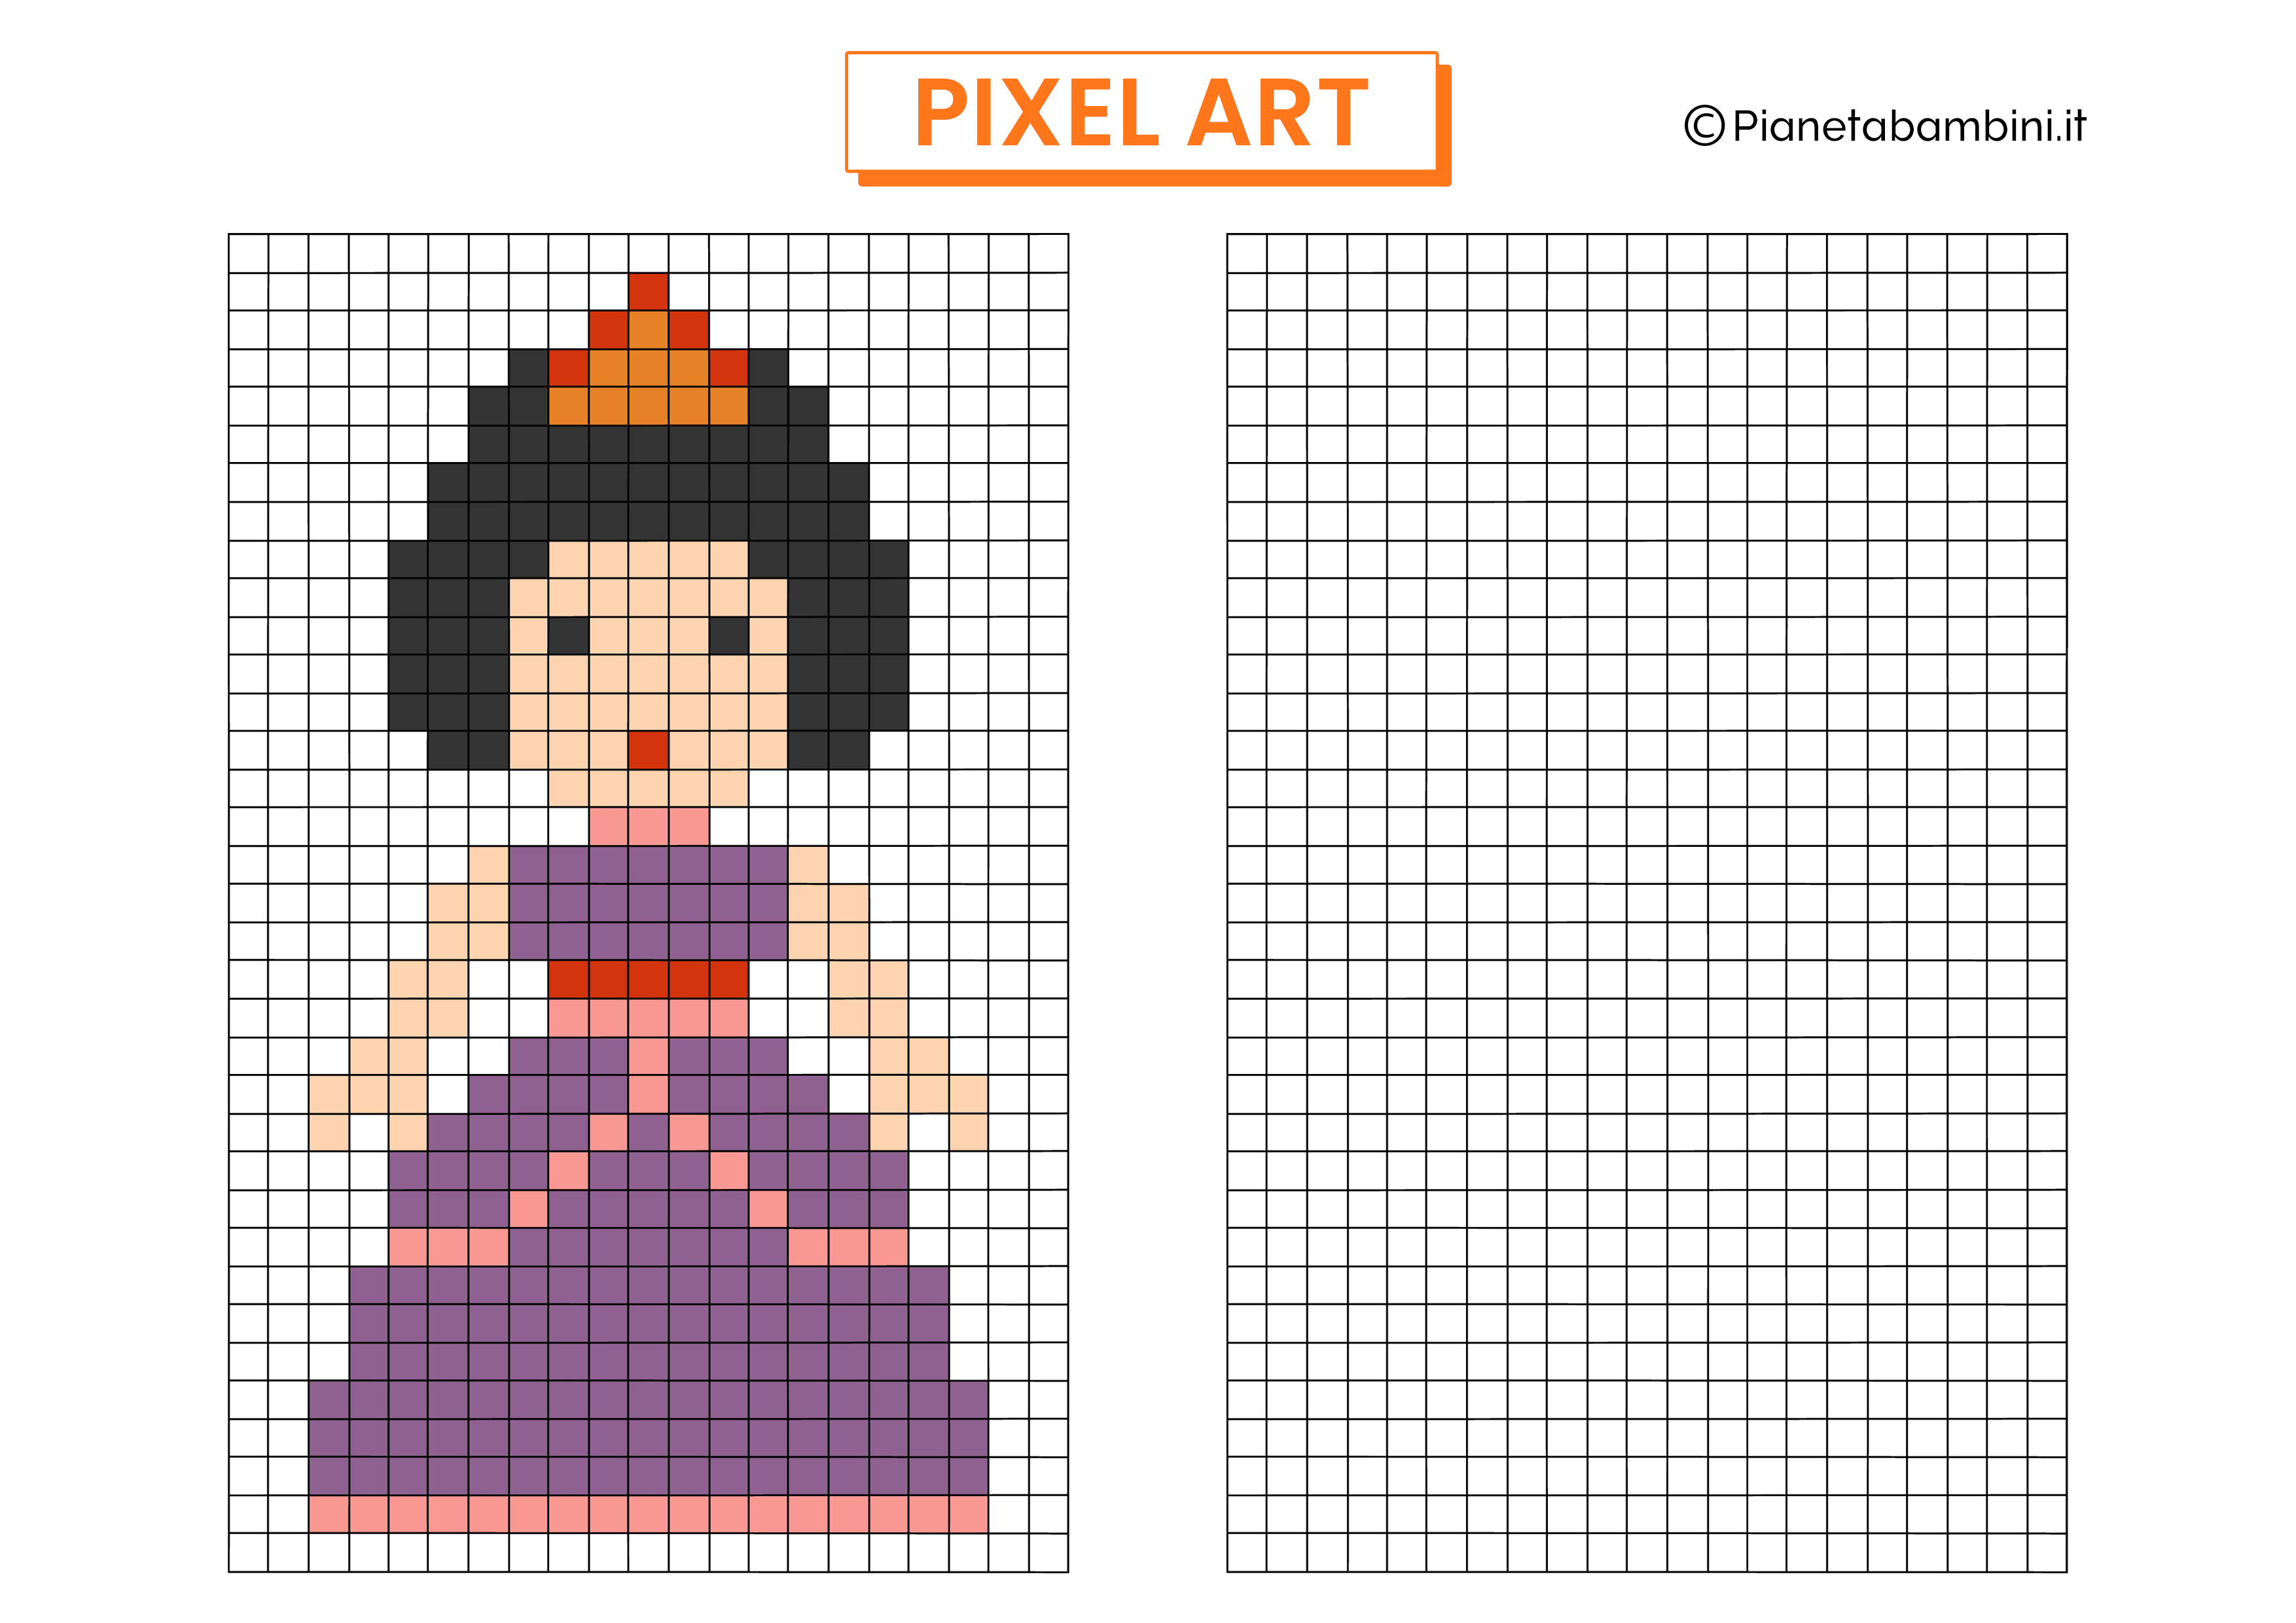 Pixel Art regina da copiare